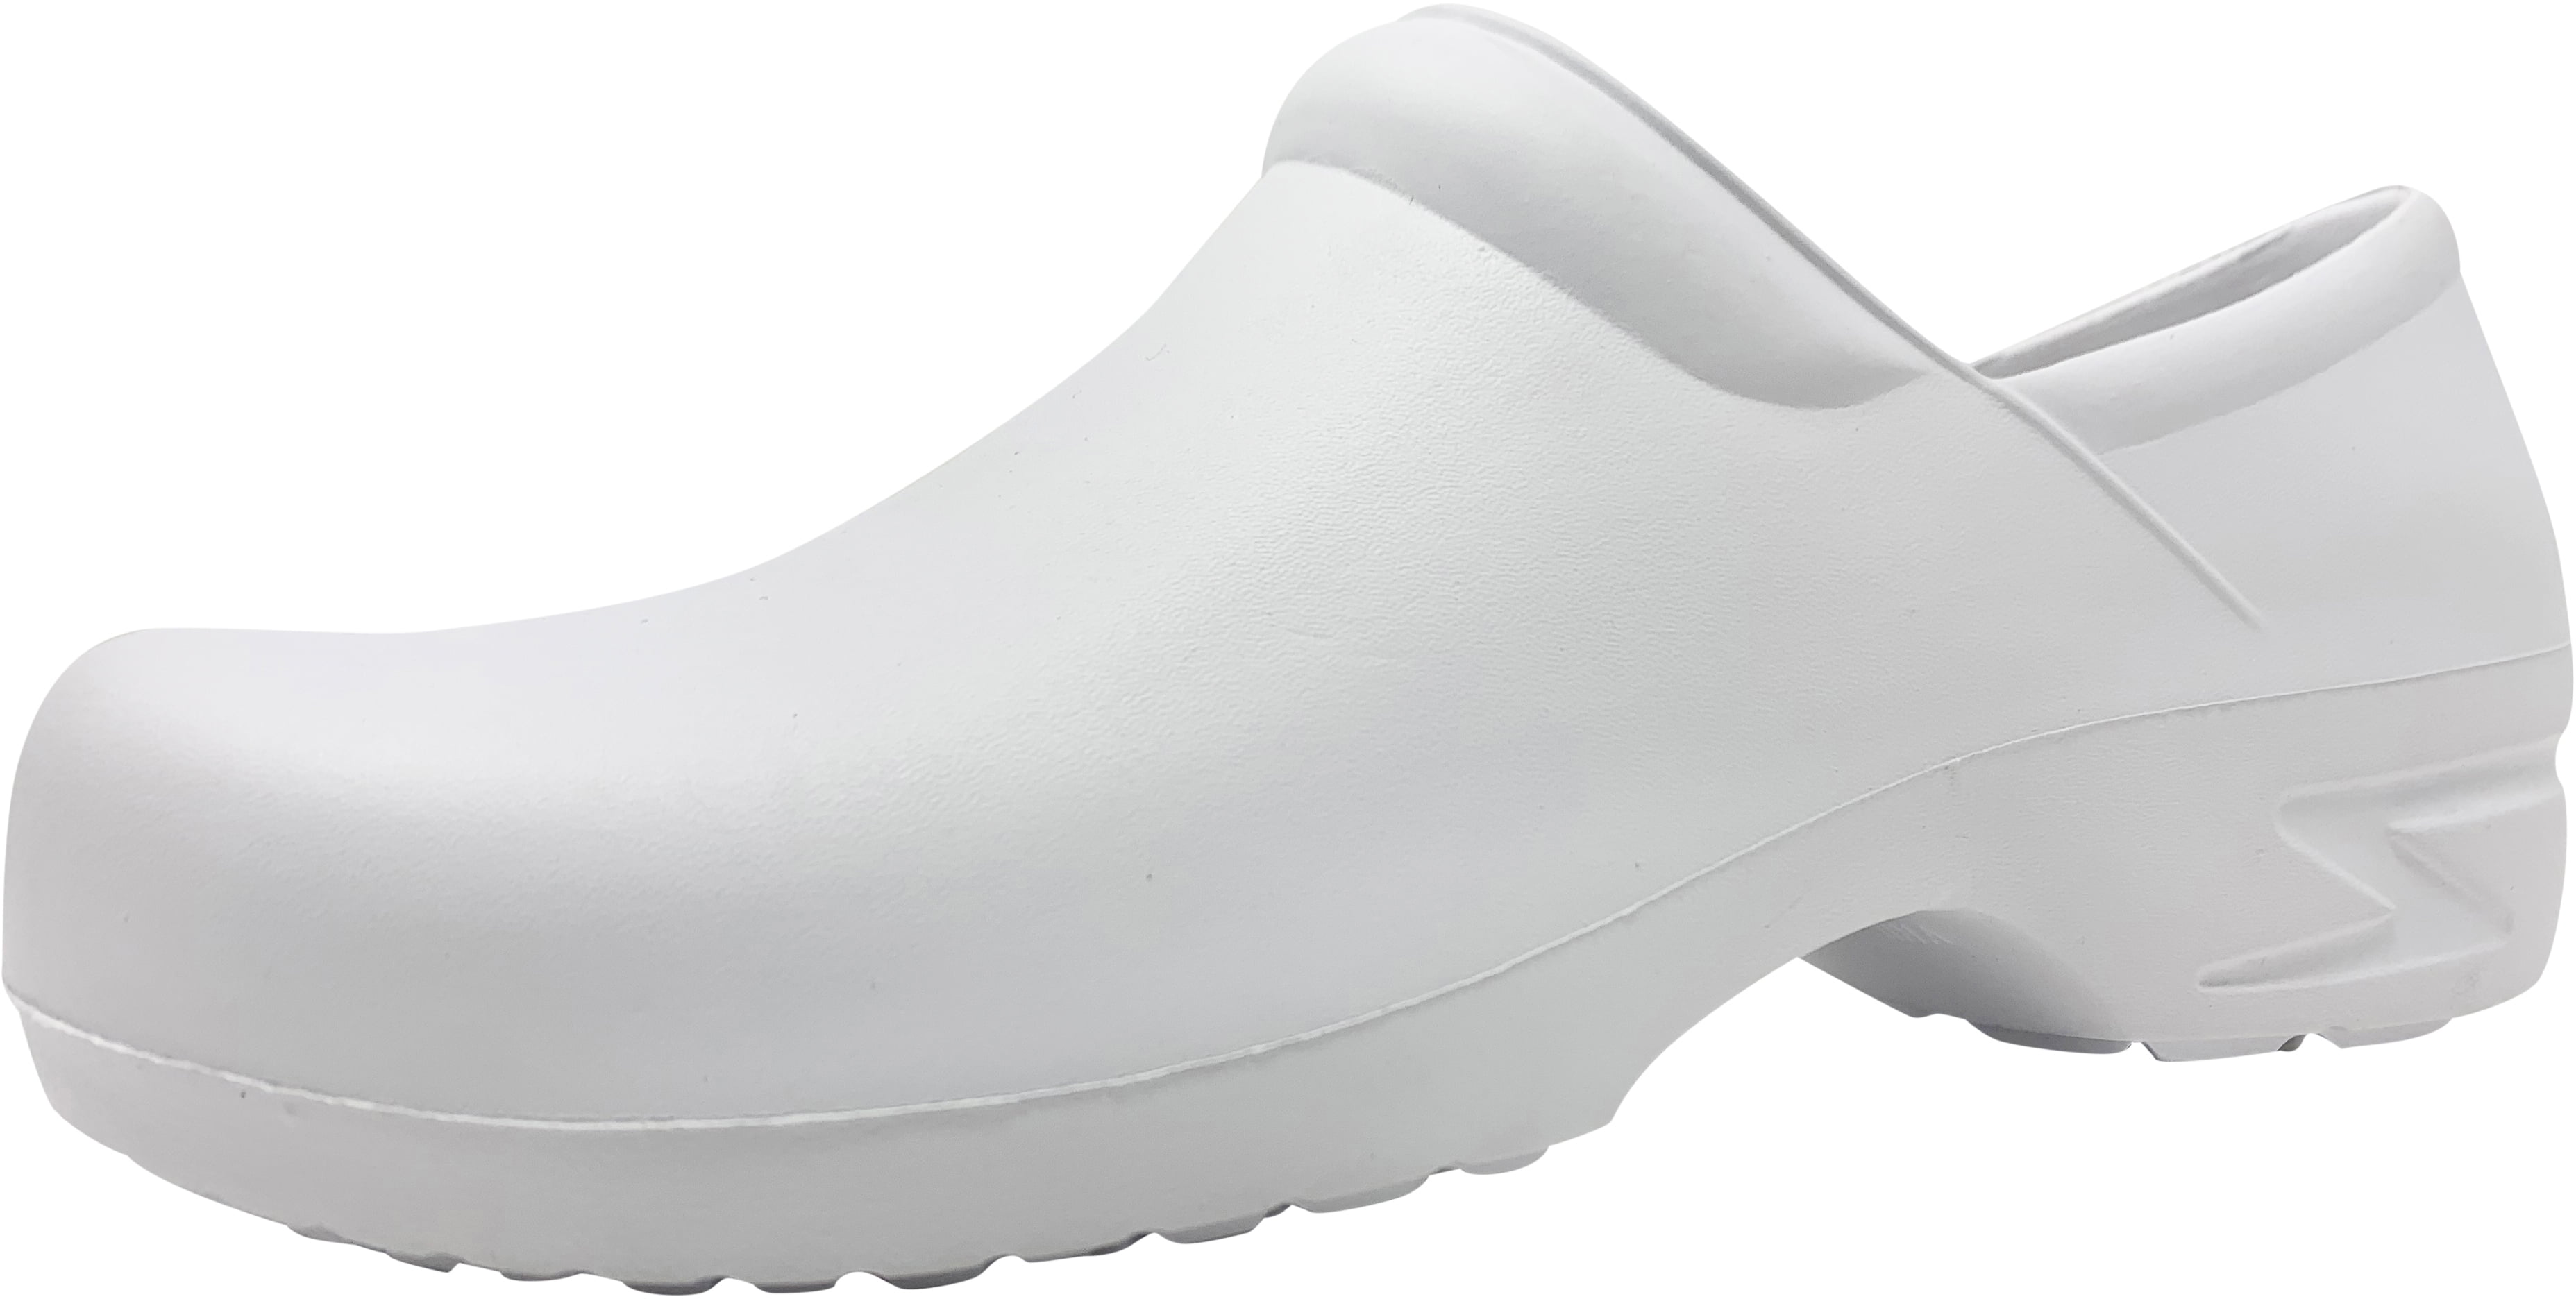 white-nursing-shoes